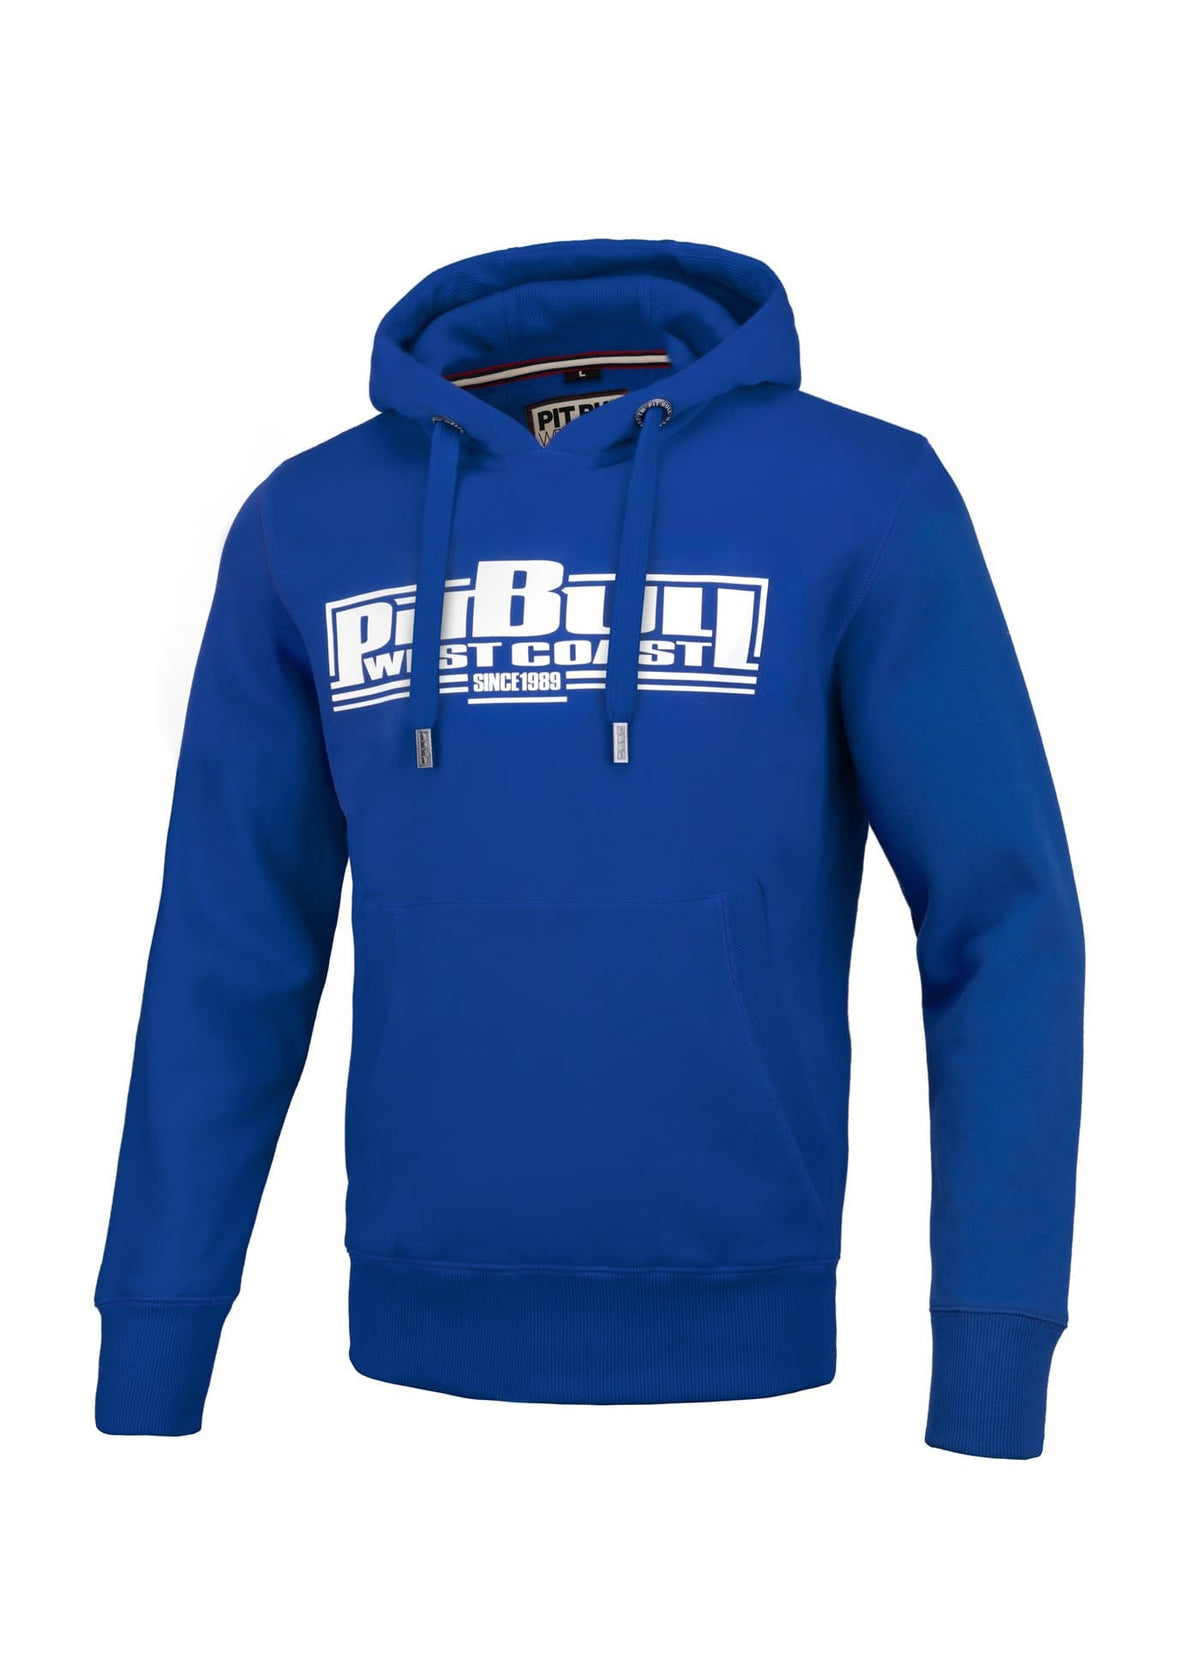 Men/ Sweatshirts/ Hoodies | Pitbull West Coast International Store